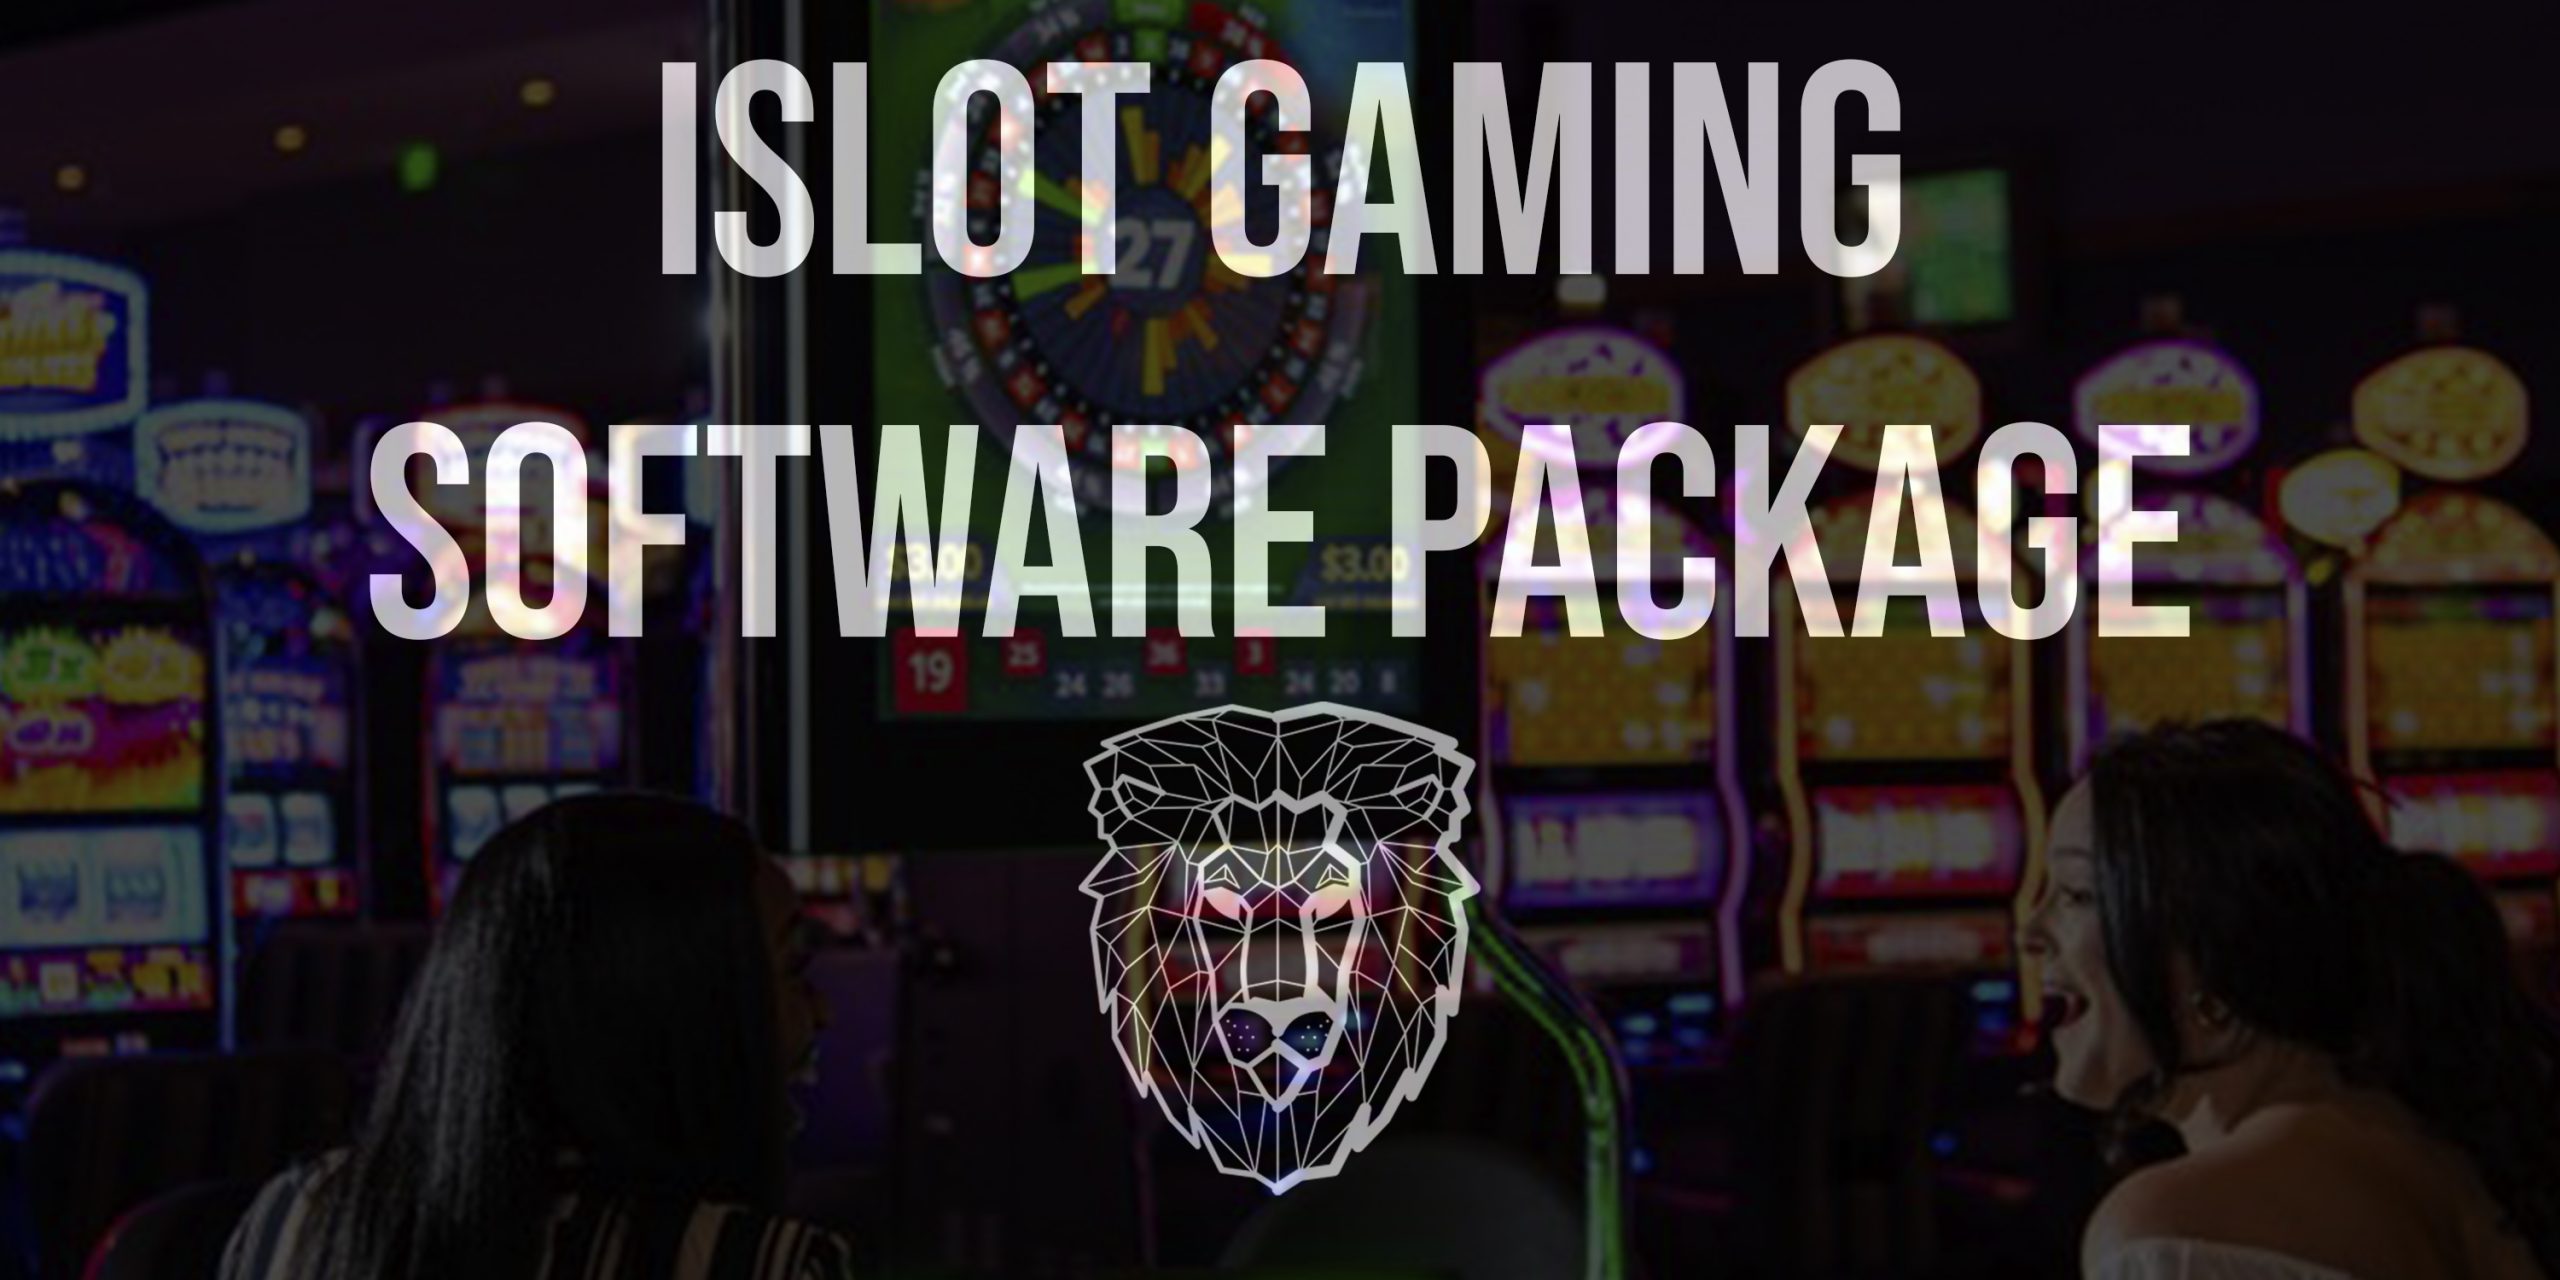 islot gaming software, sweepstakes internet software, gaming casino program